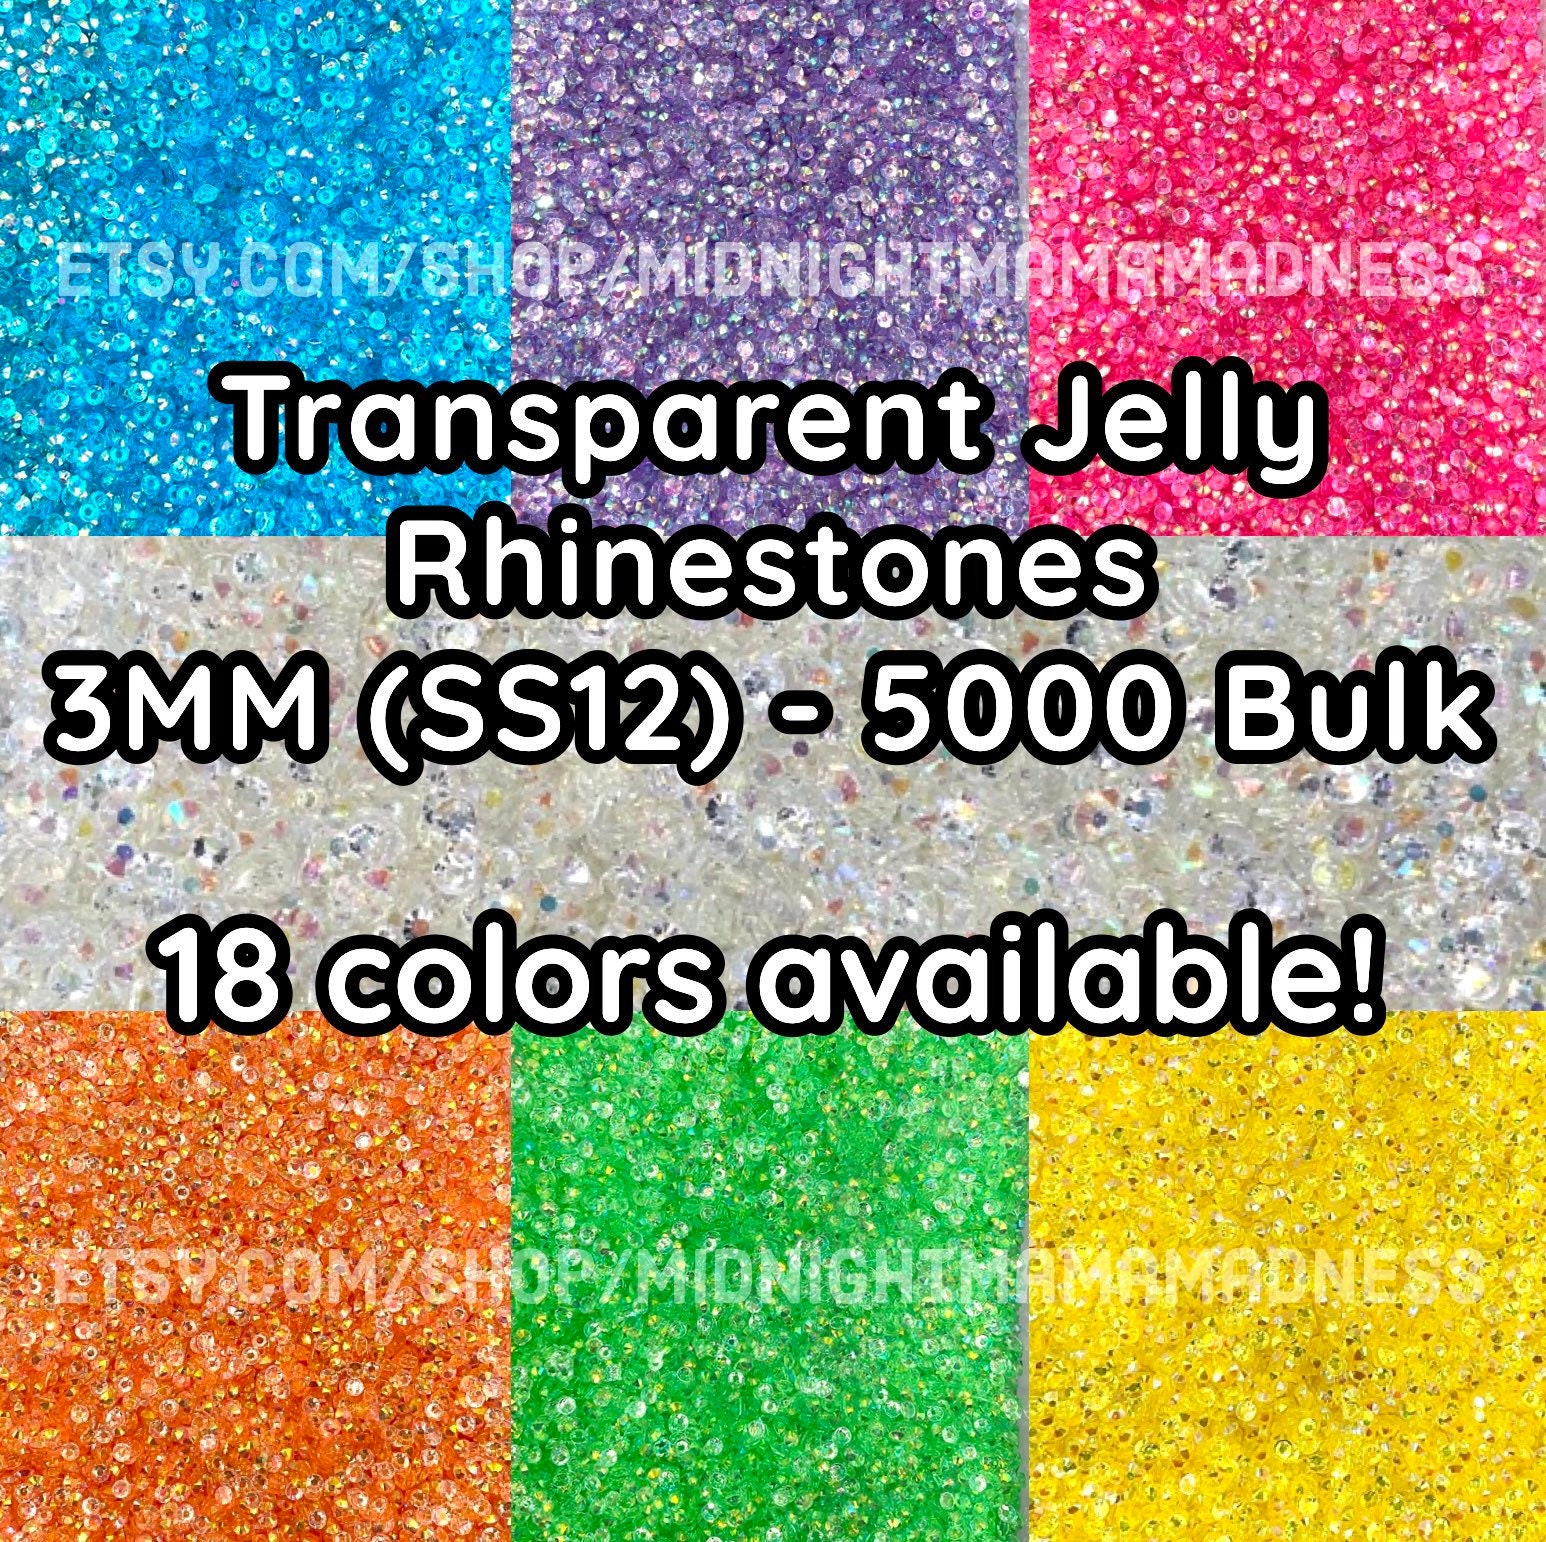 3MM Transparent Jelly Rhinestones 5000 QTY BULK Bag Non-hotfix Flatback  Faceted Resin AB Rhinestone SS12 Clear 